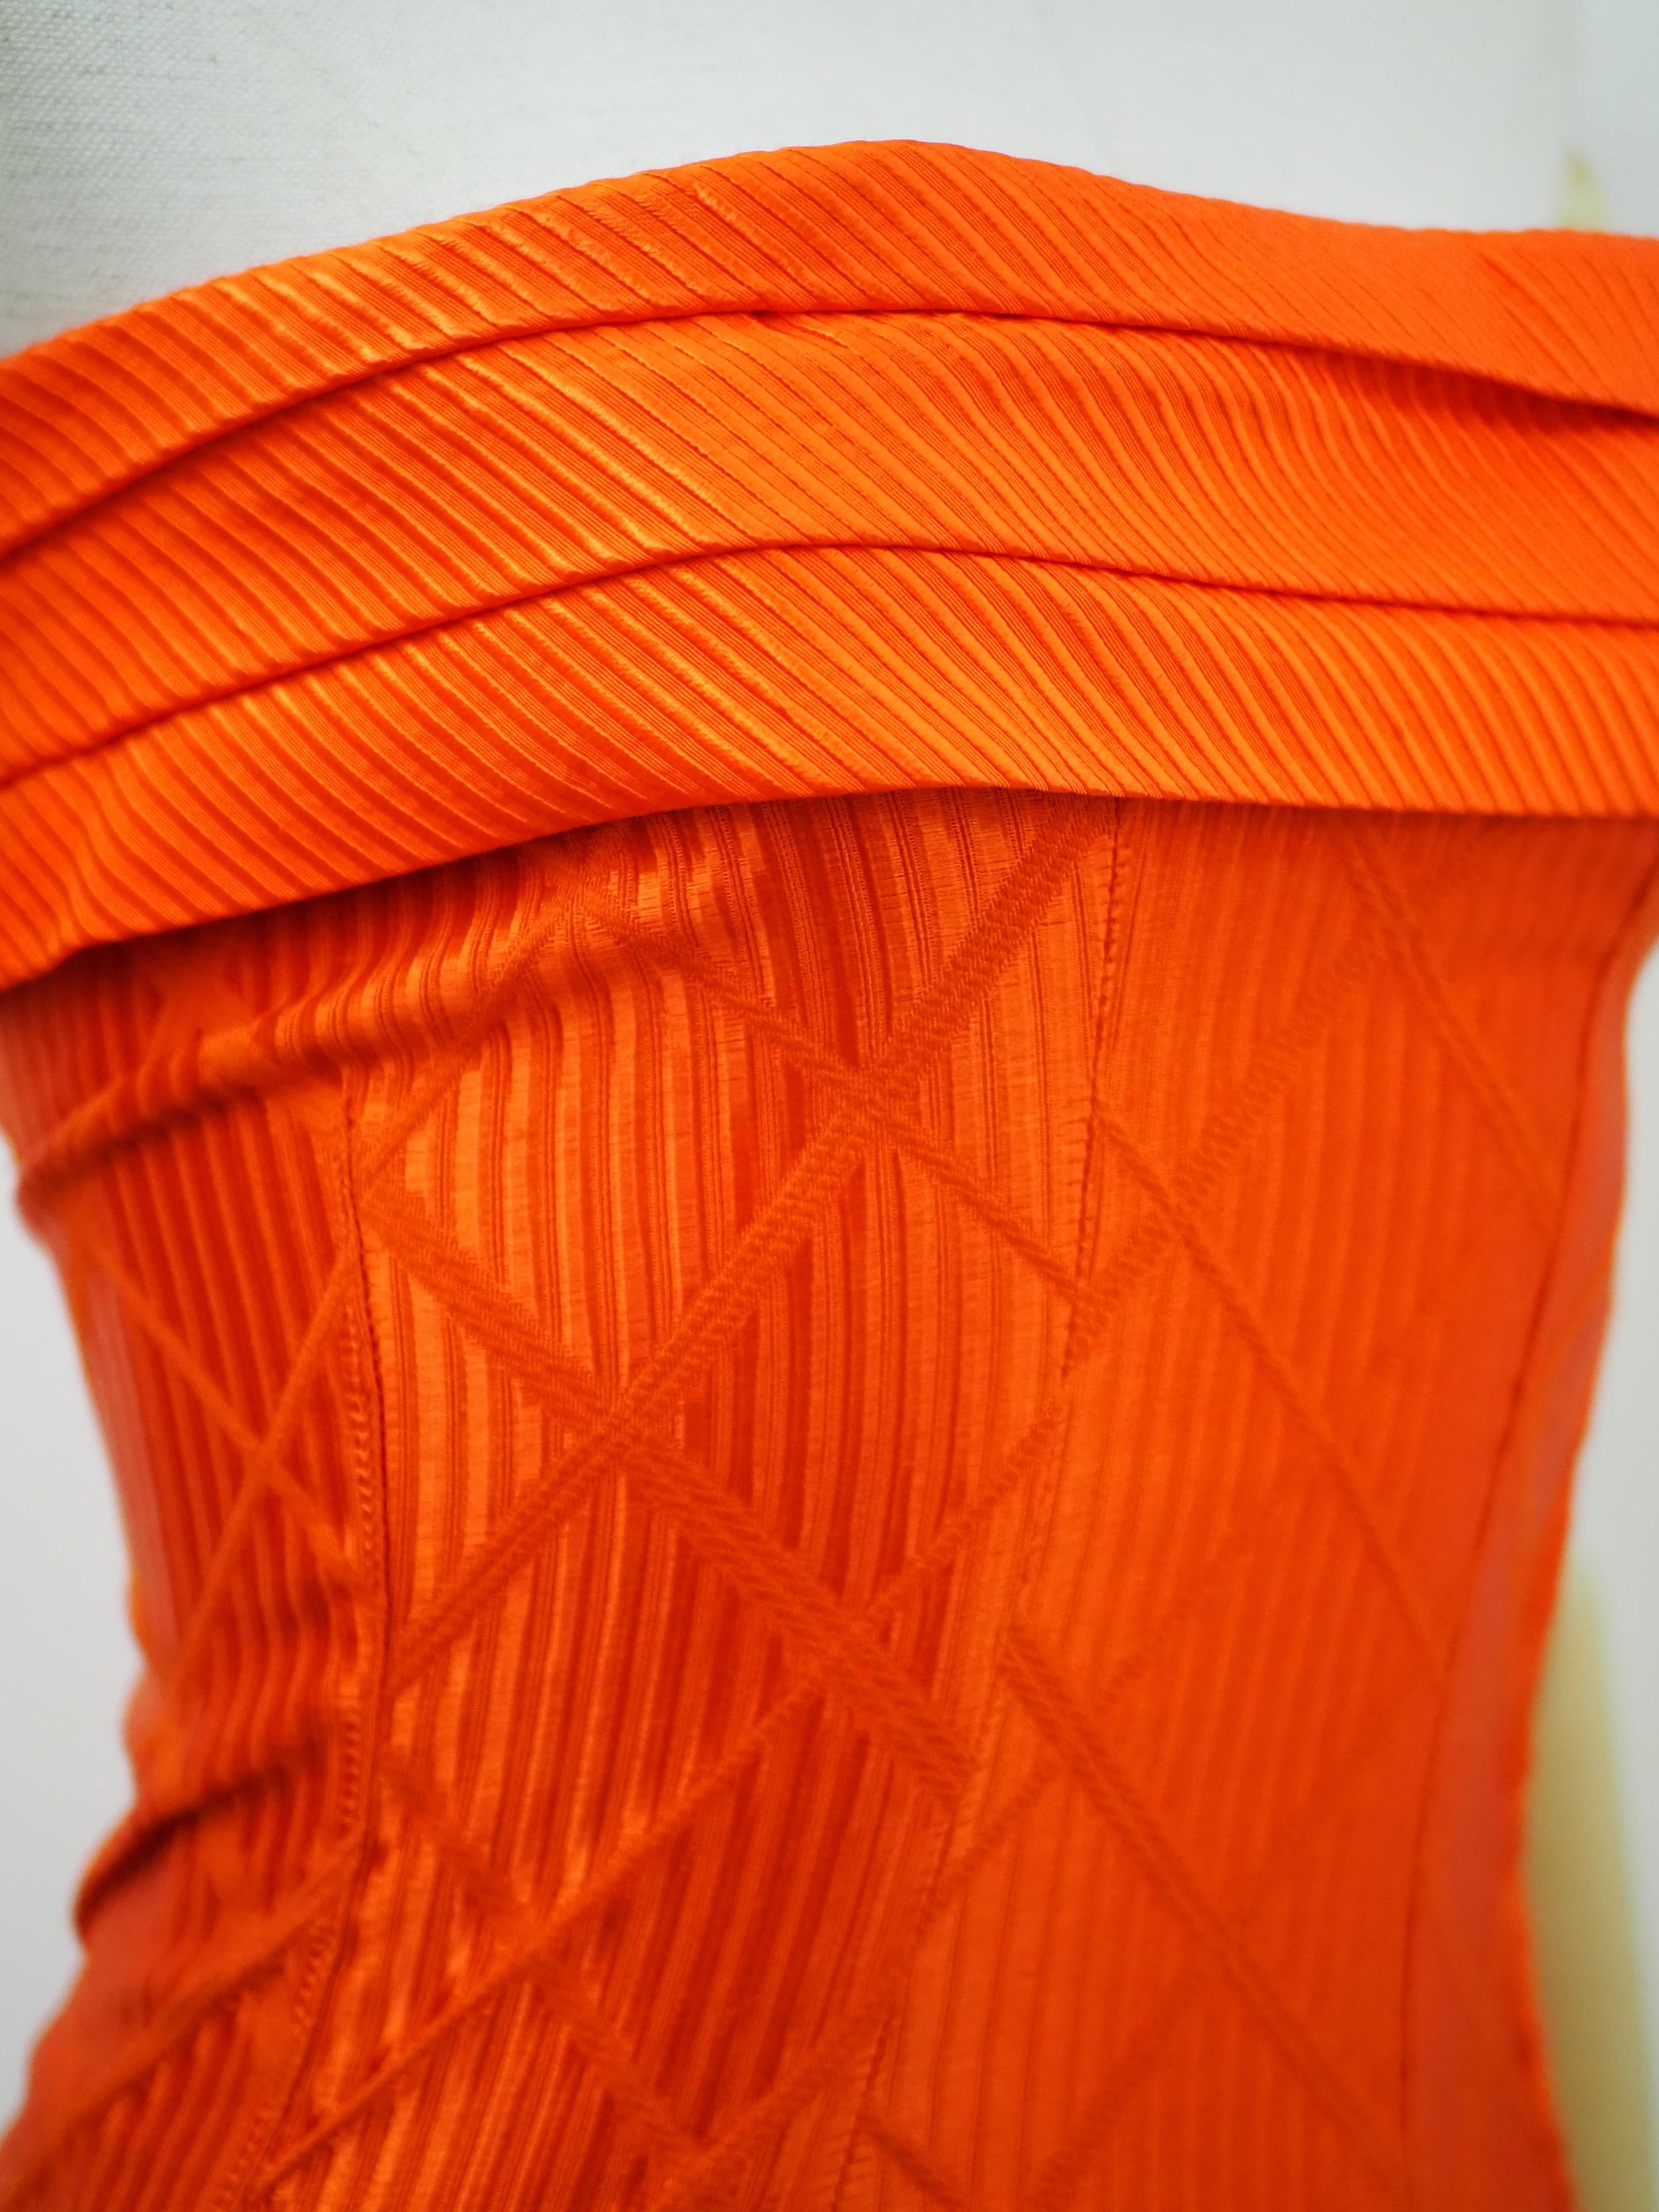 Versus by Gianni Versace orange dress 1